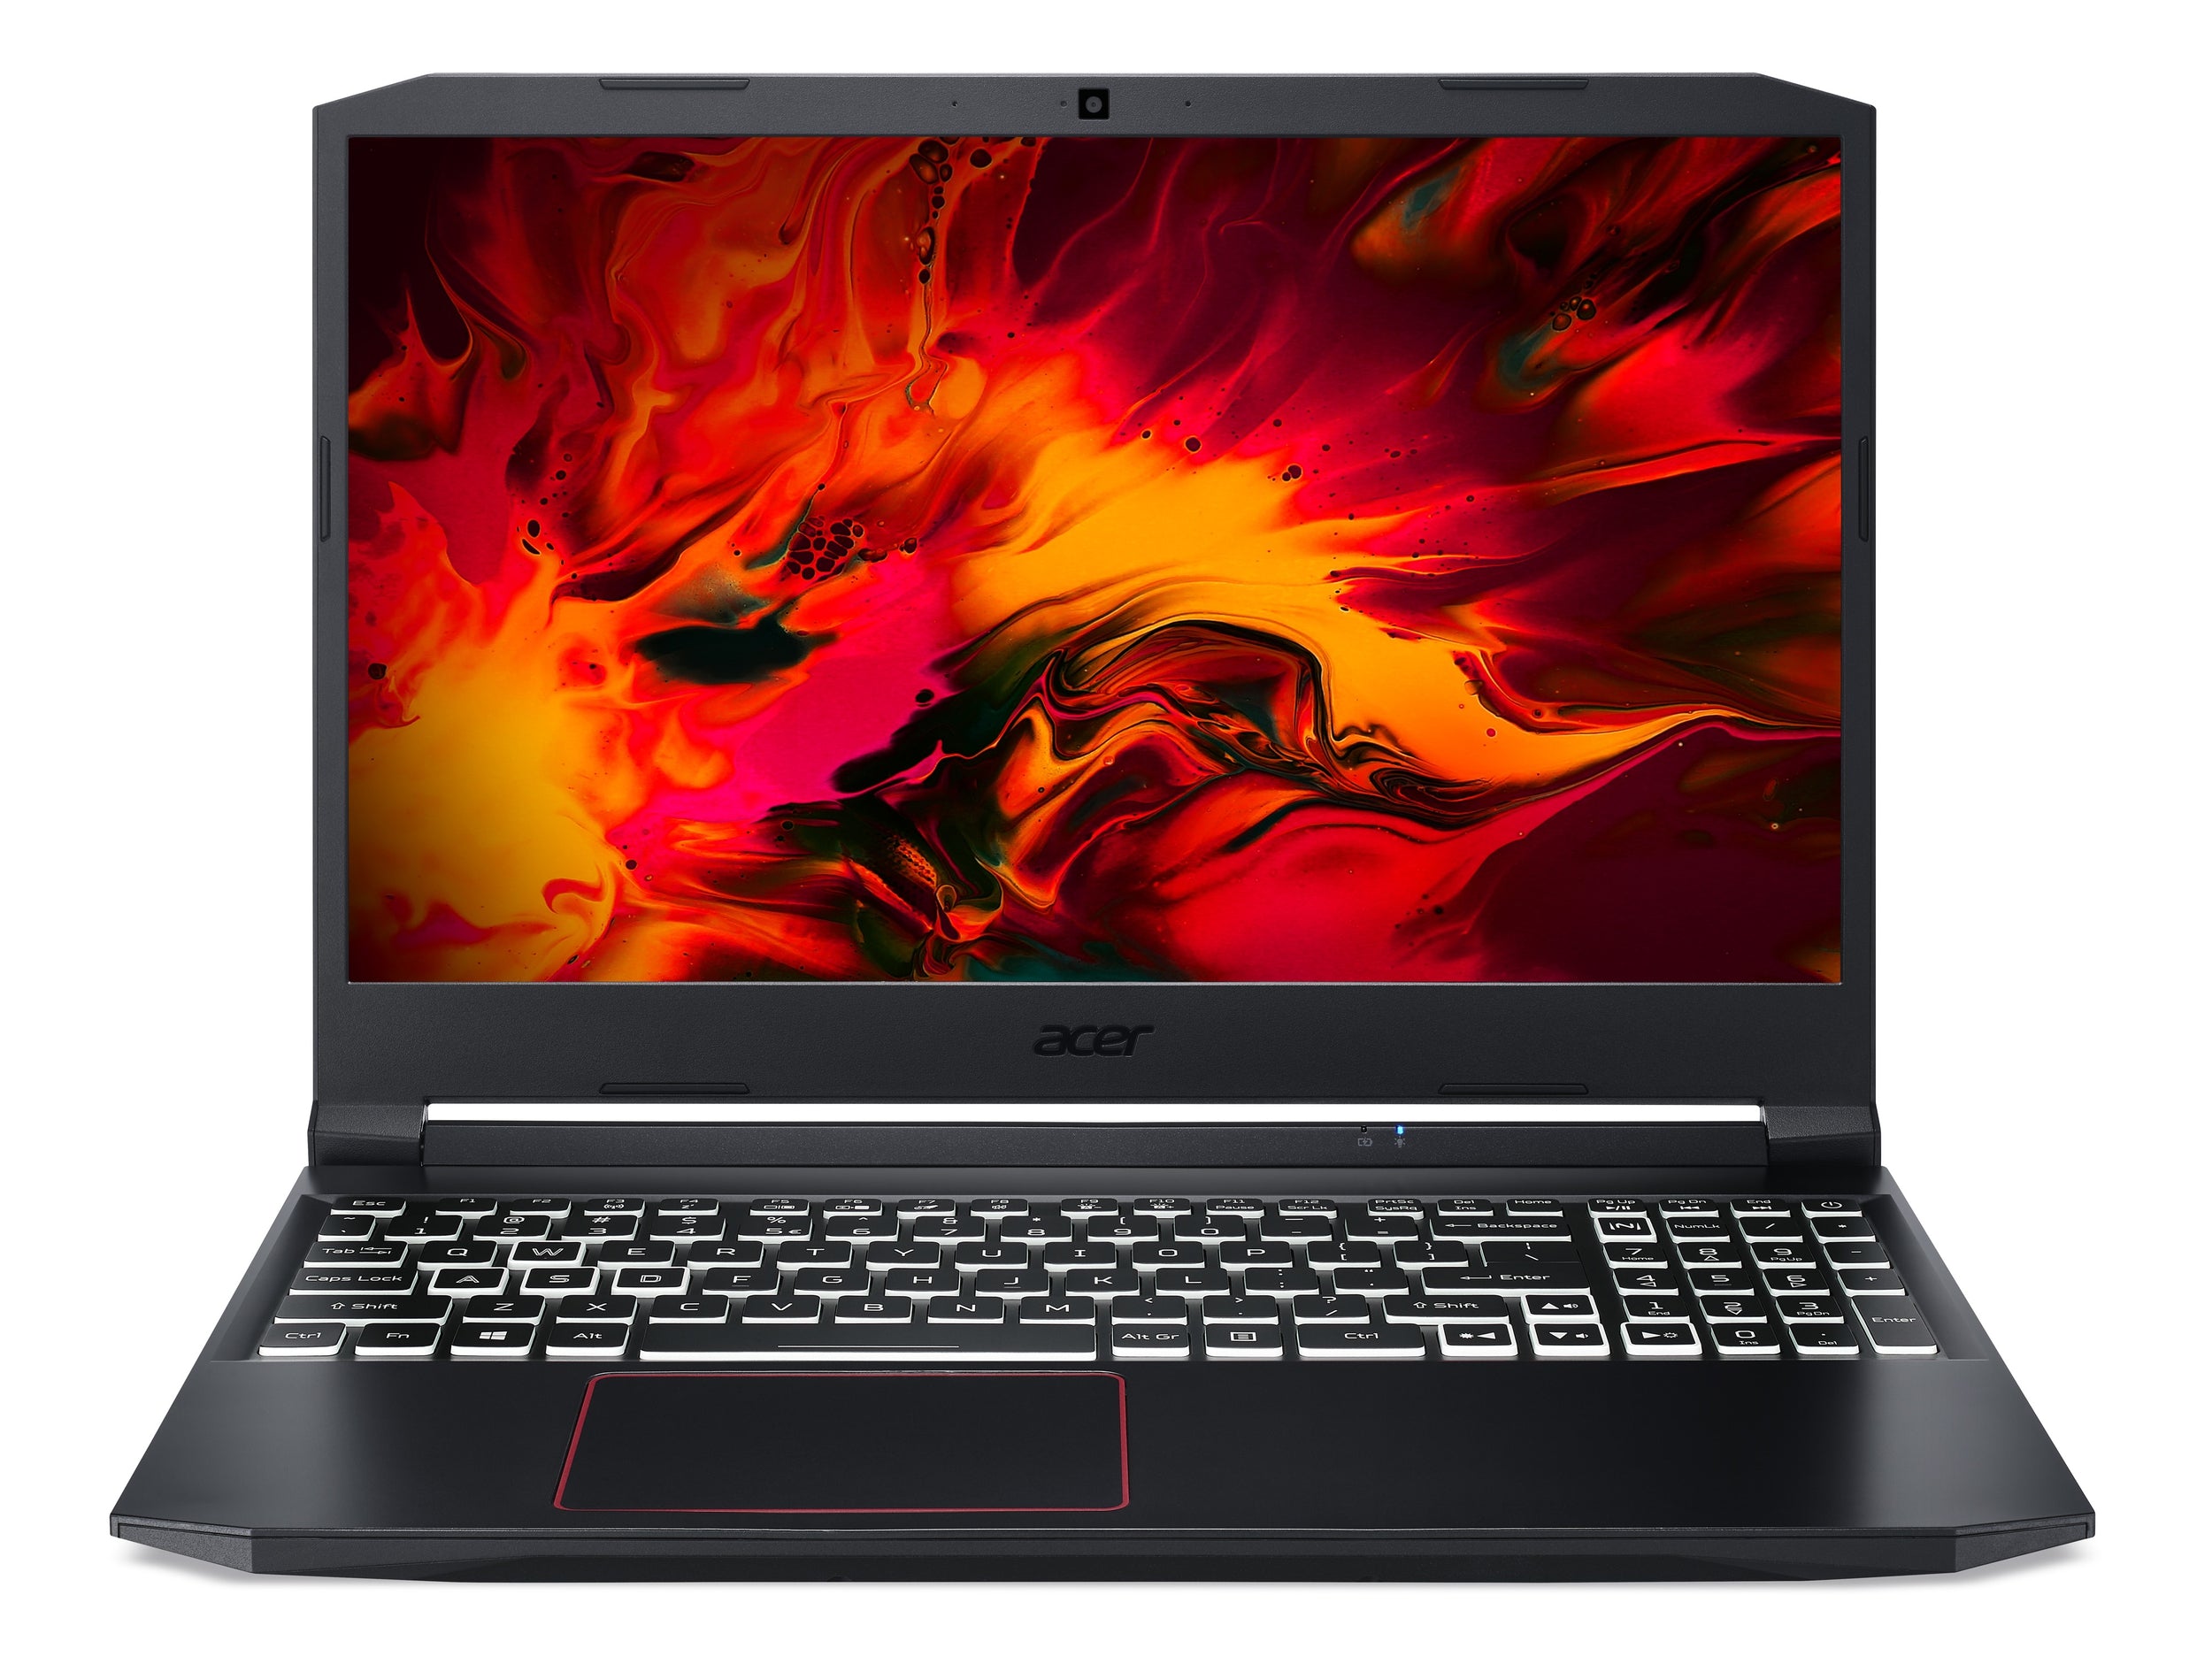 Computadora Portátil Gamer Acer An515-55-7581 Nitro Intel Core I7-10A Ram 8Gb Win10H 512Gbssd 15.6 Fullhd 144Hz Rtx3060 6Gb Gddr6 Teclado Retroiluminado Rojo Año Seguro